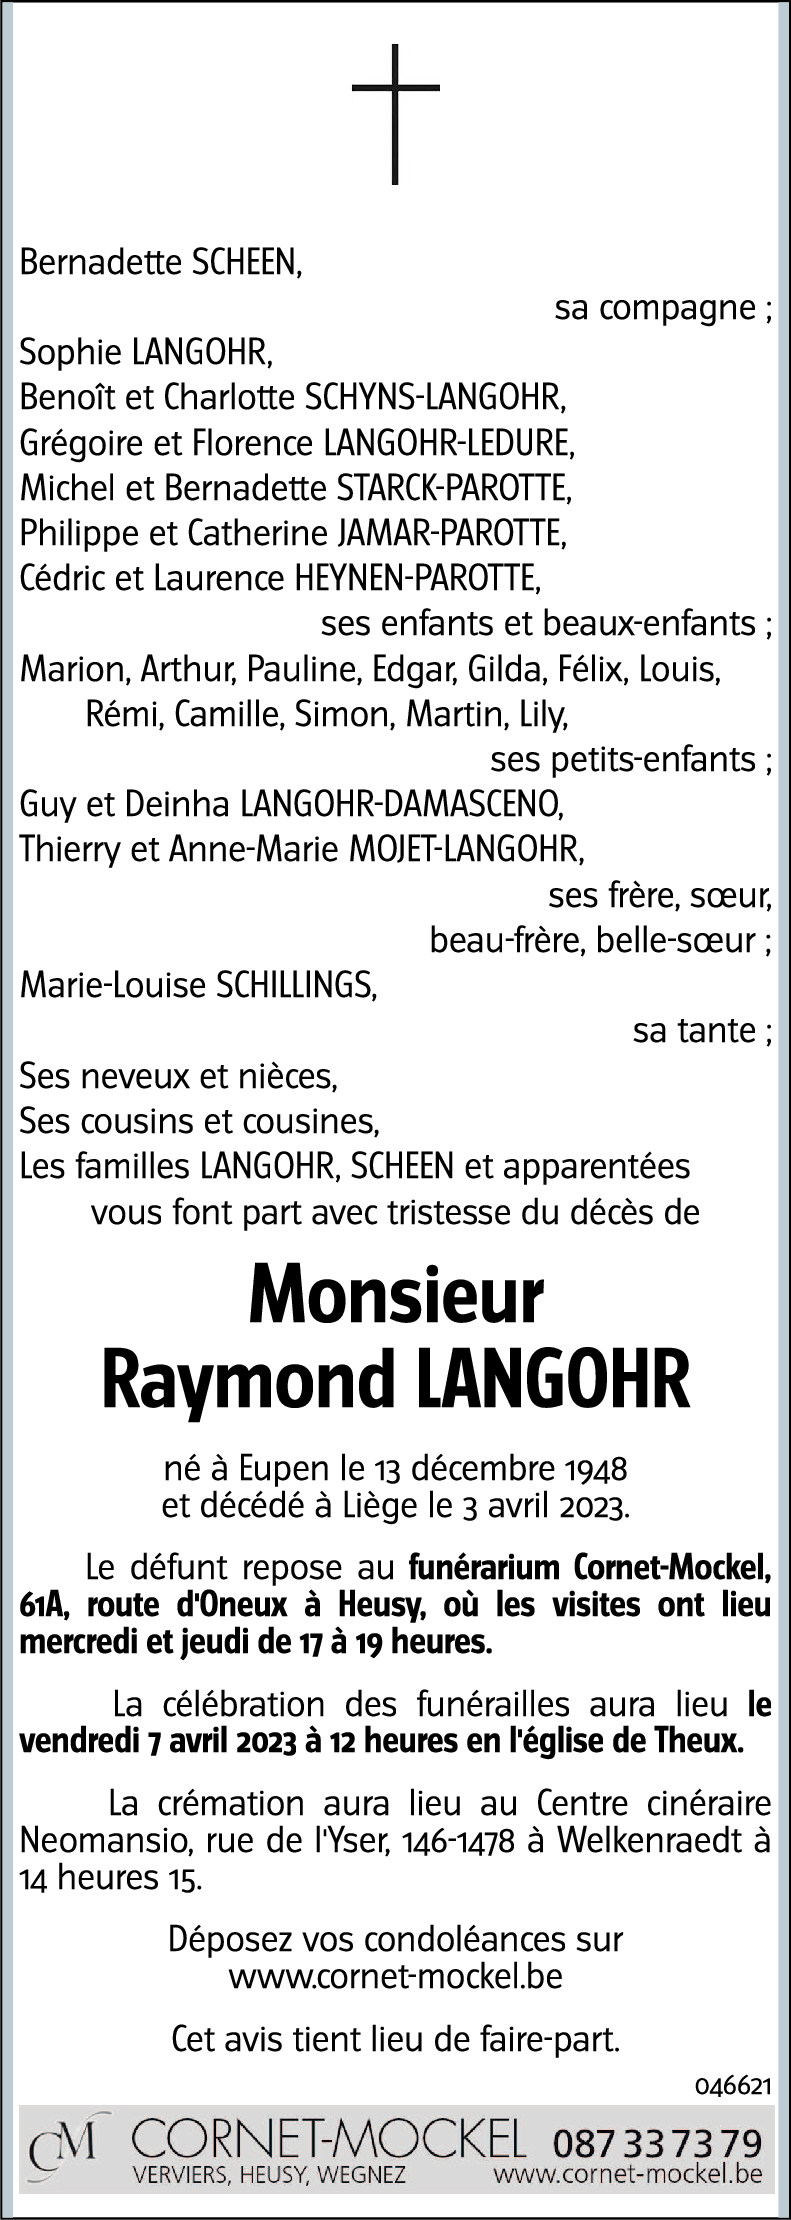 Raymond LANGOHR